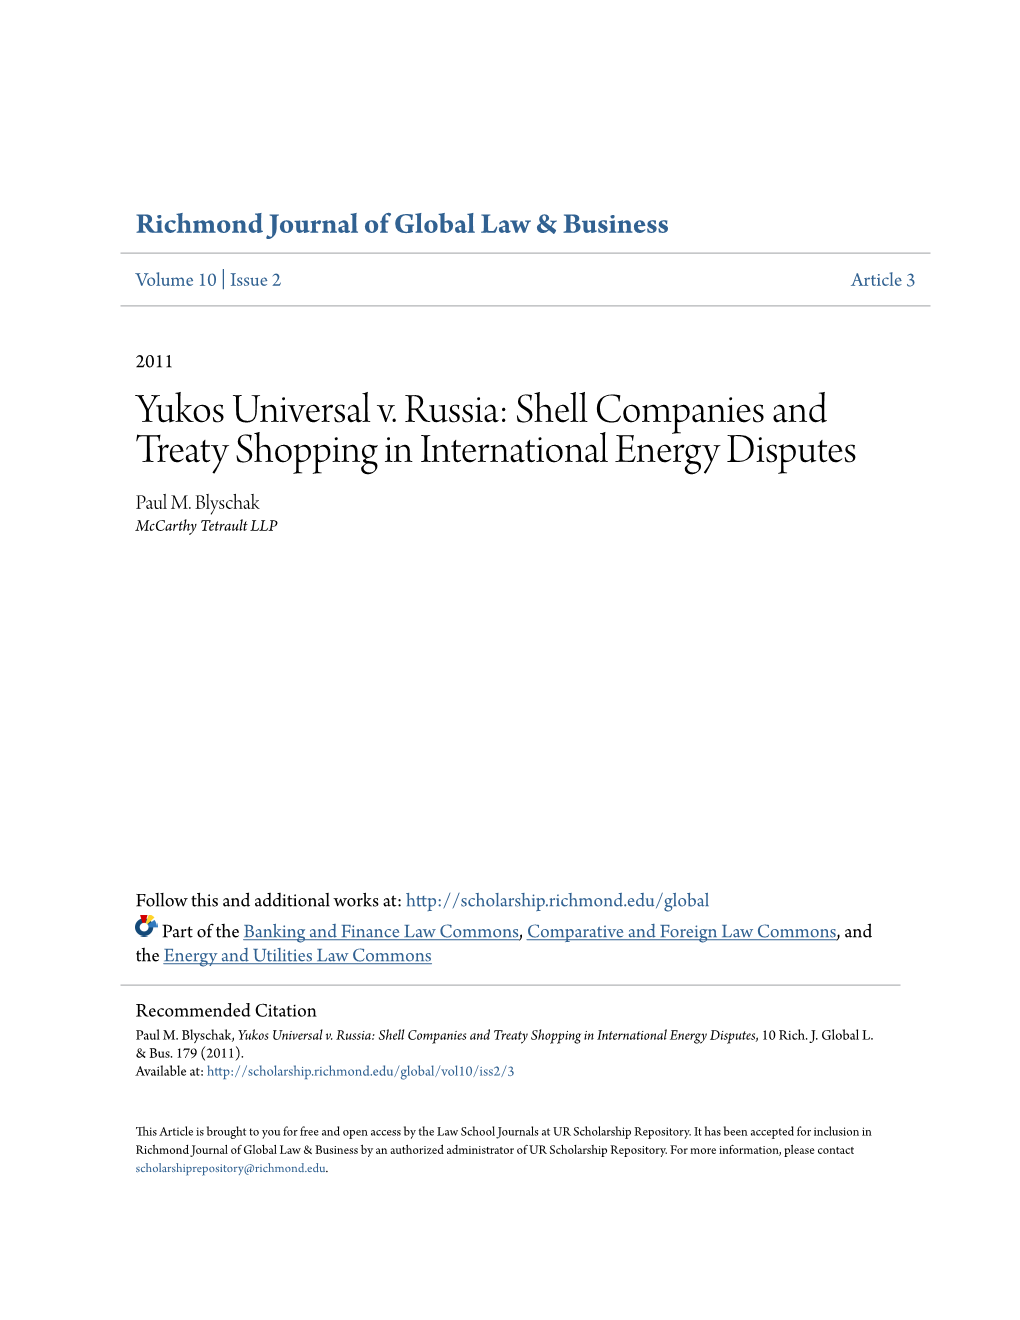 Yukos Universal V. Russia: Shell Companies and Treaty Shopping in International Energy Disputes Paul M